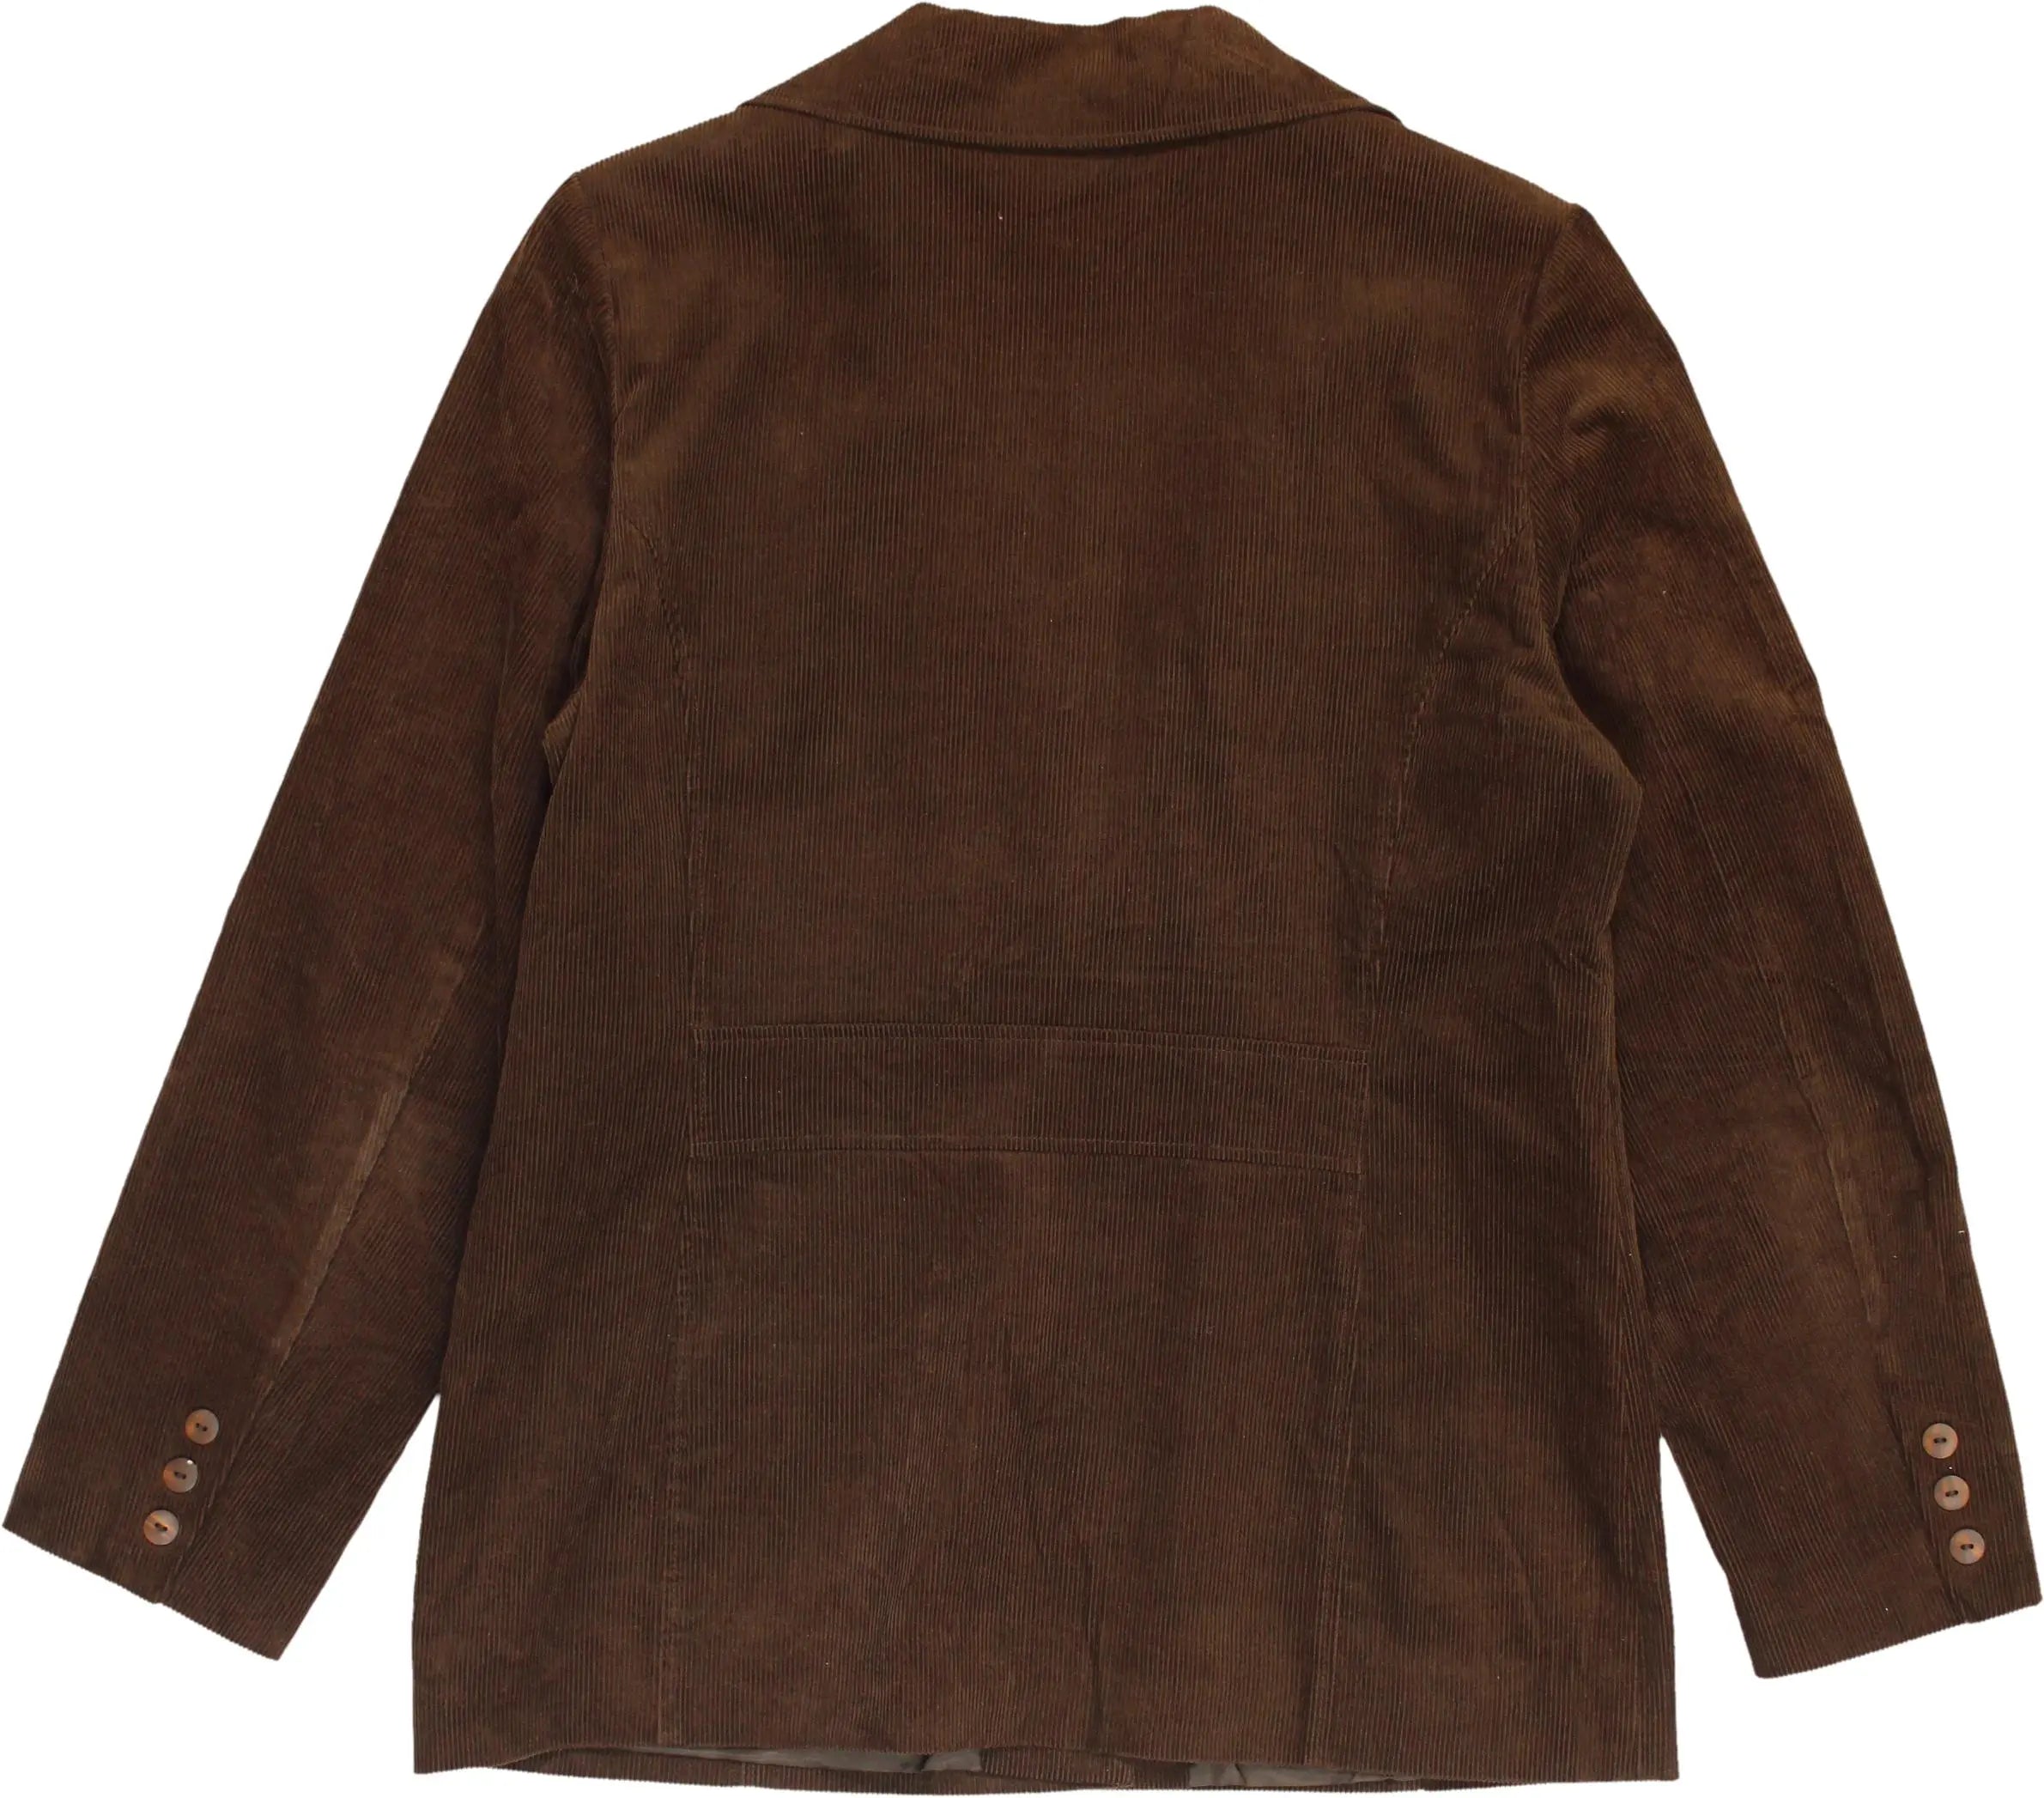 Miss Etam - Corduroy Jacket- ThriftTale.com - Vintage and second handclothing